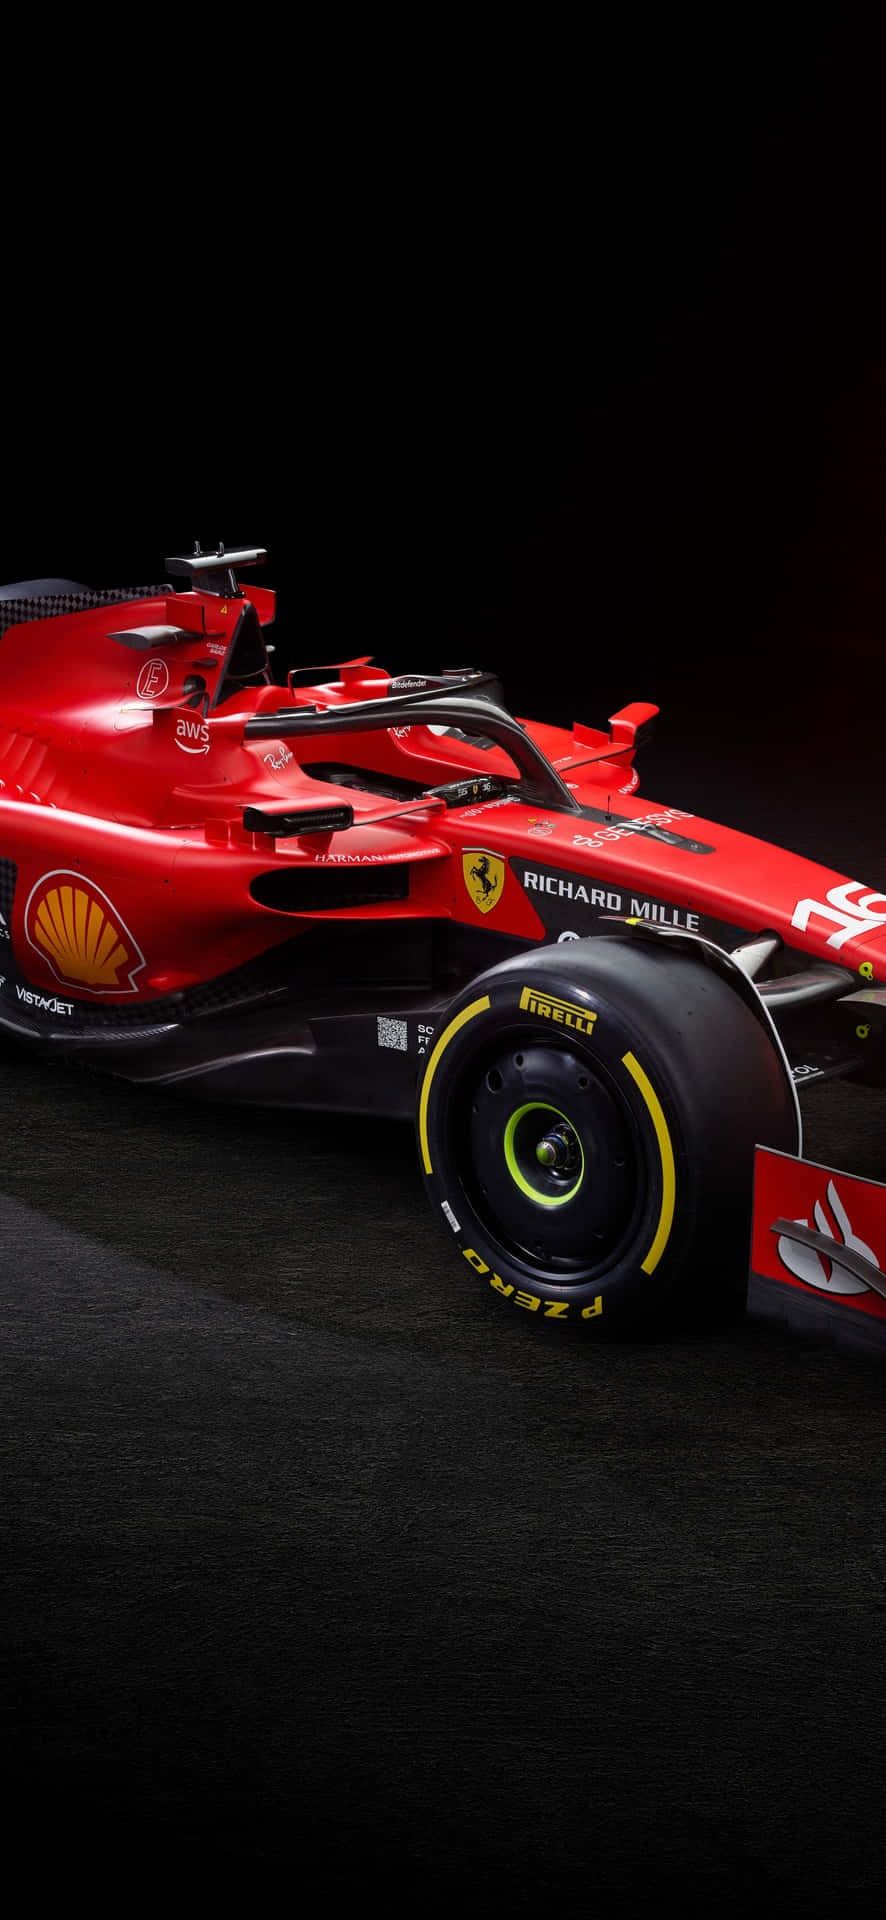 Ferrari F1 Racecar Side View Wallpaper